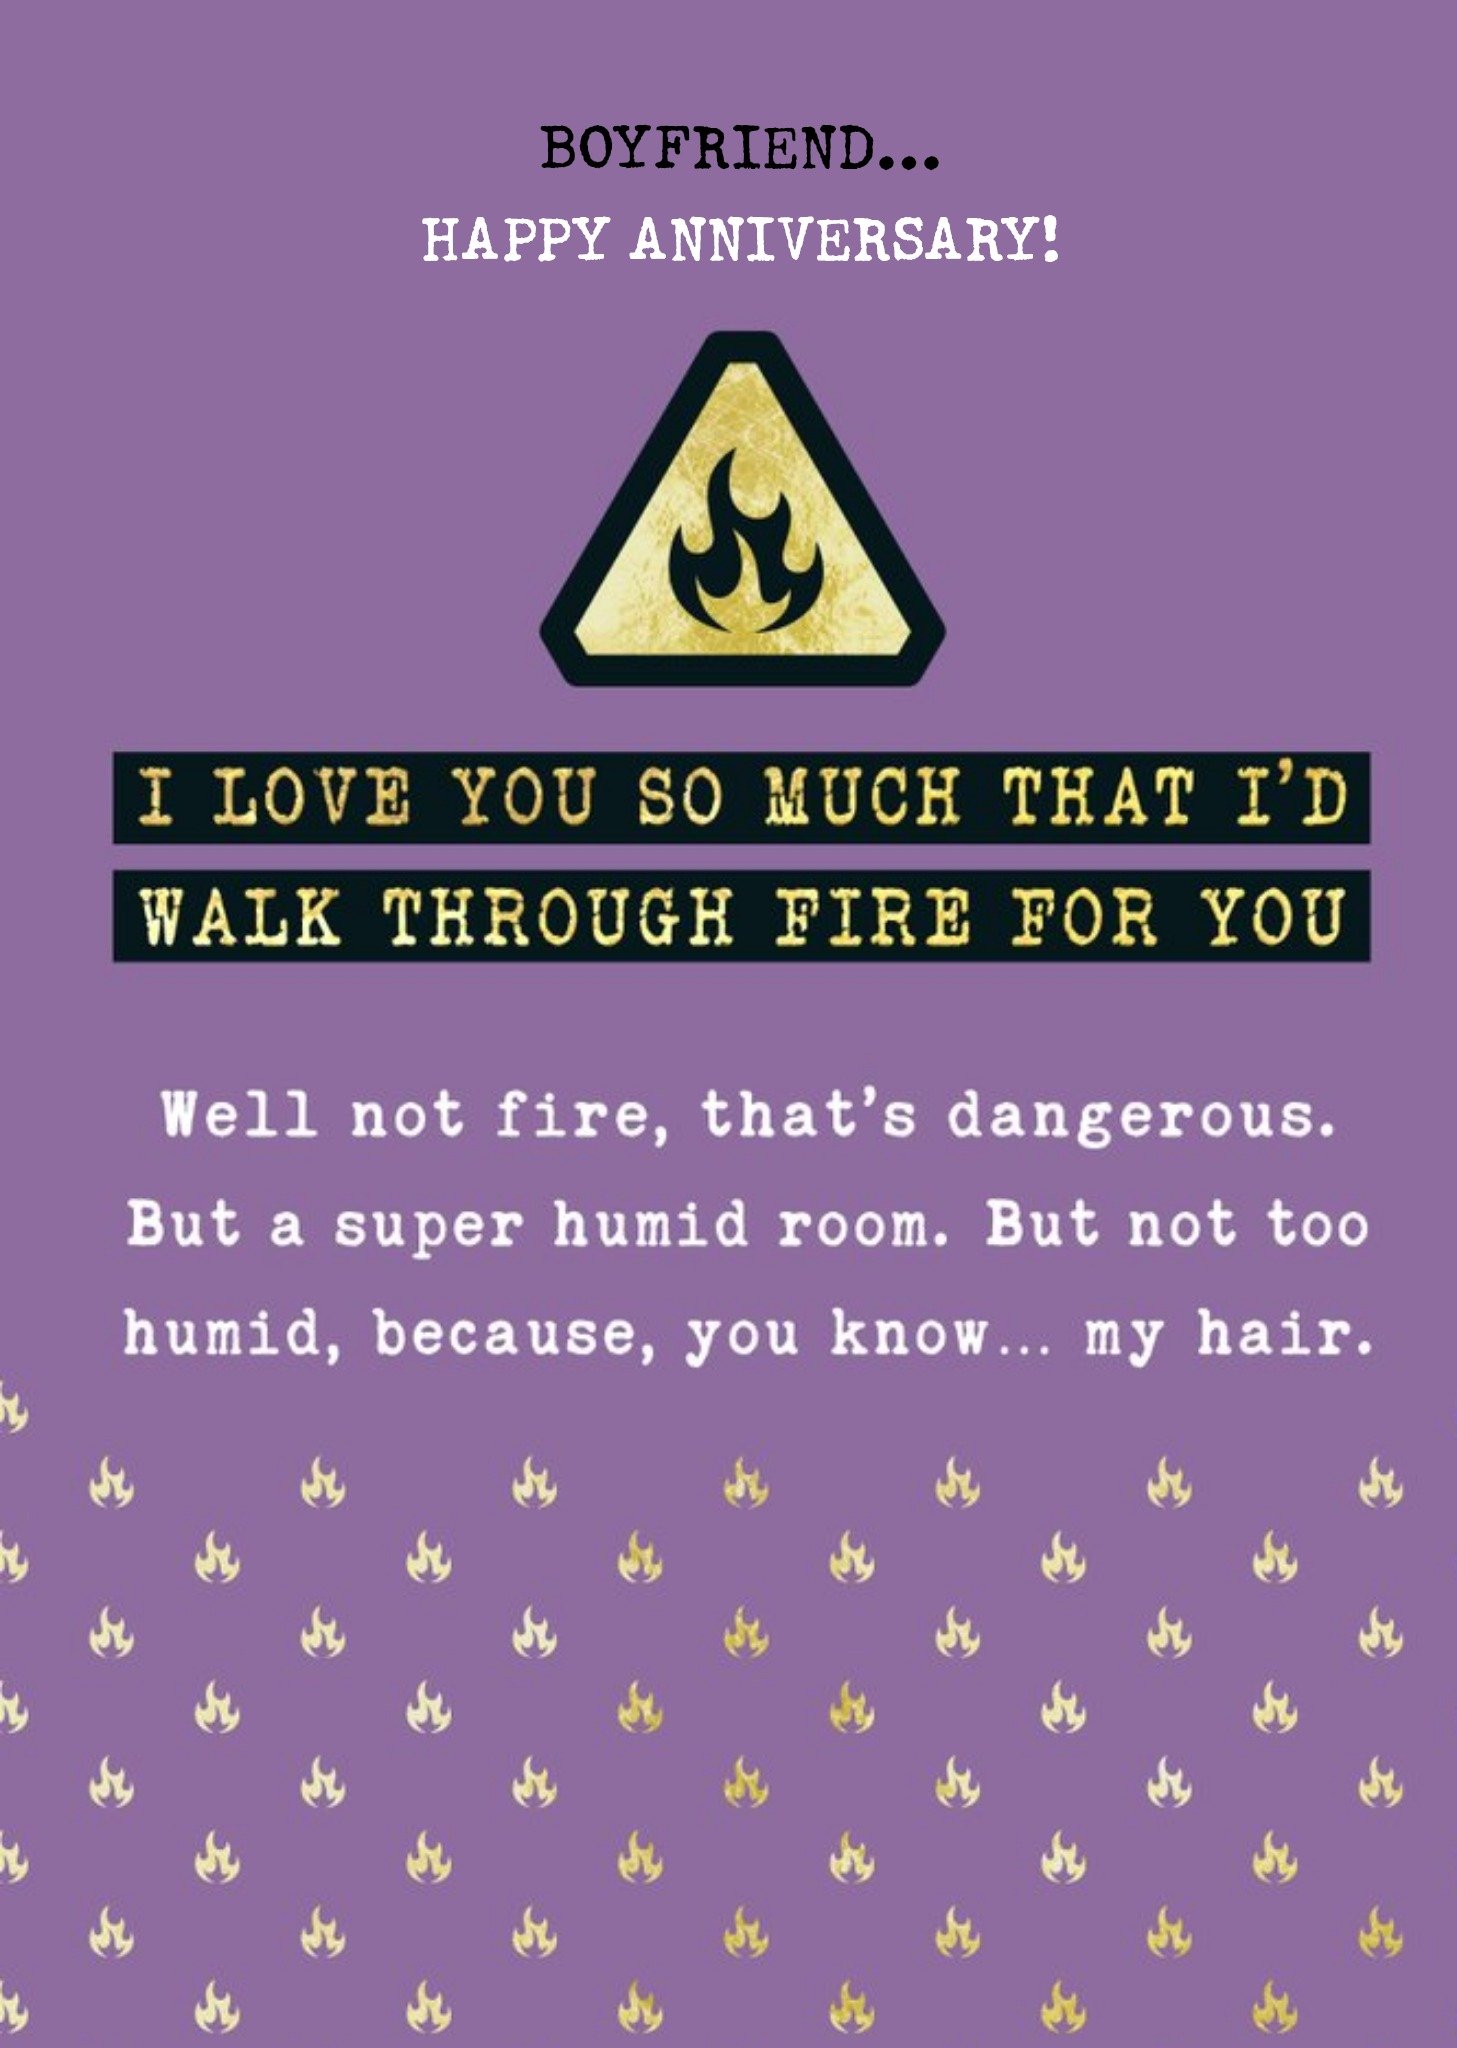 Moonpig Funny Anniversary Card For Boyfriend - Walk Through Fire, Large